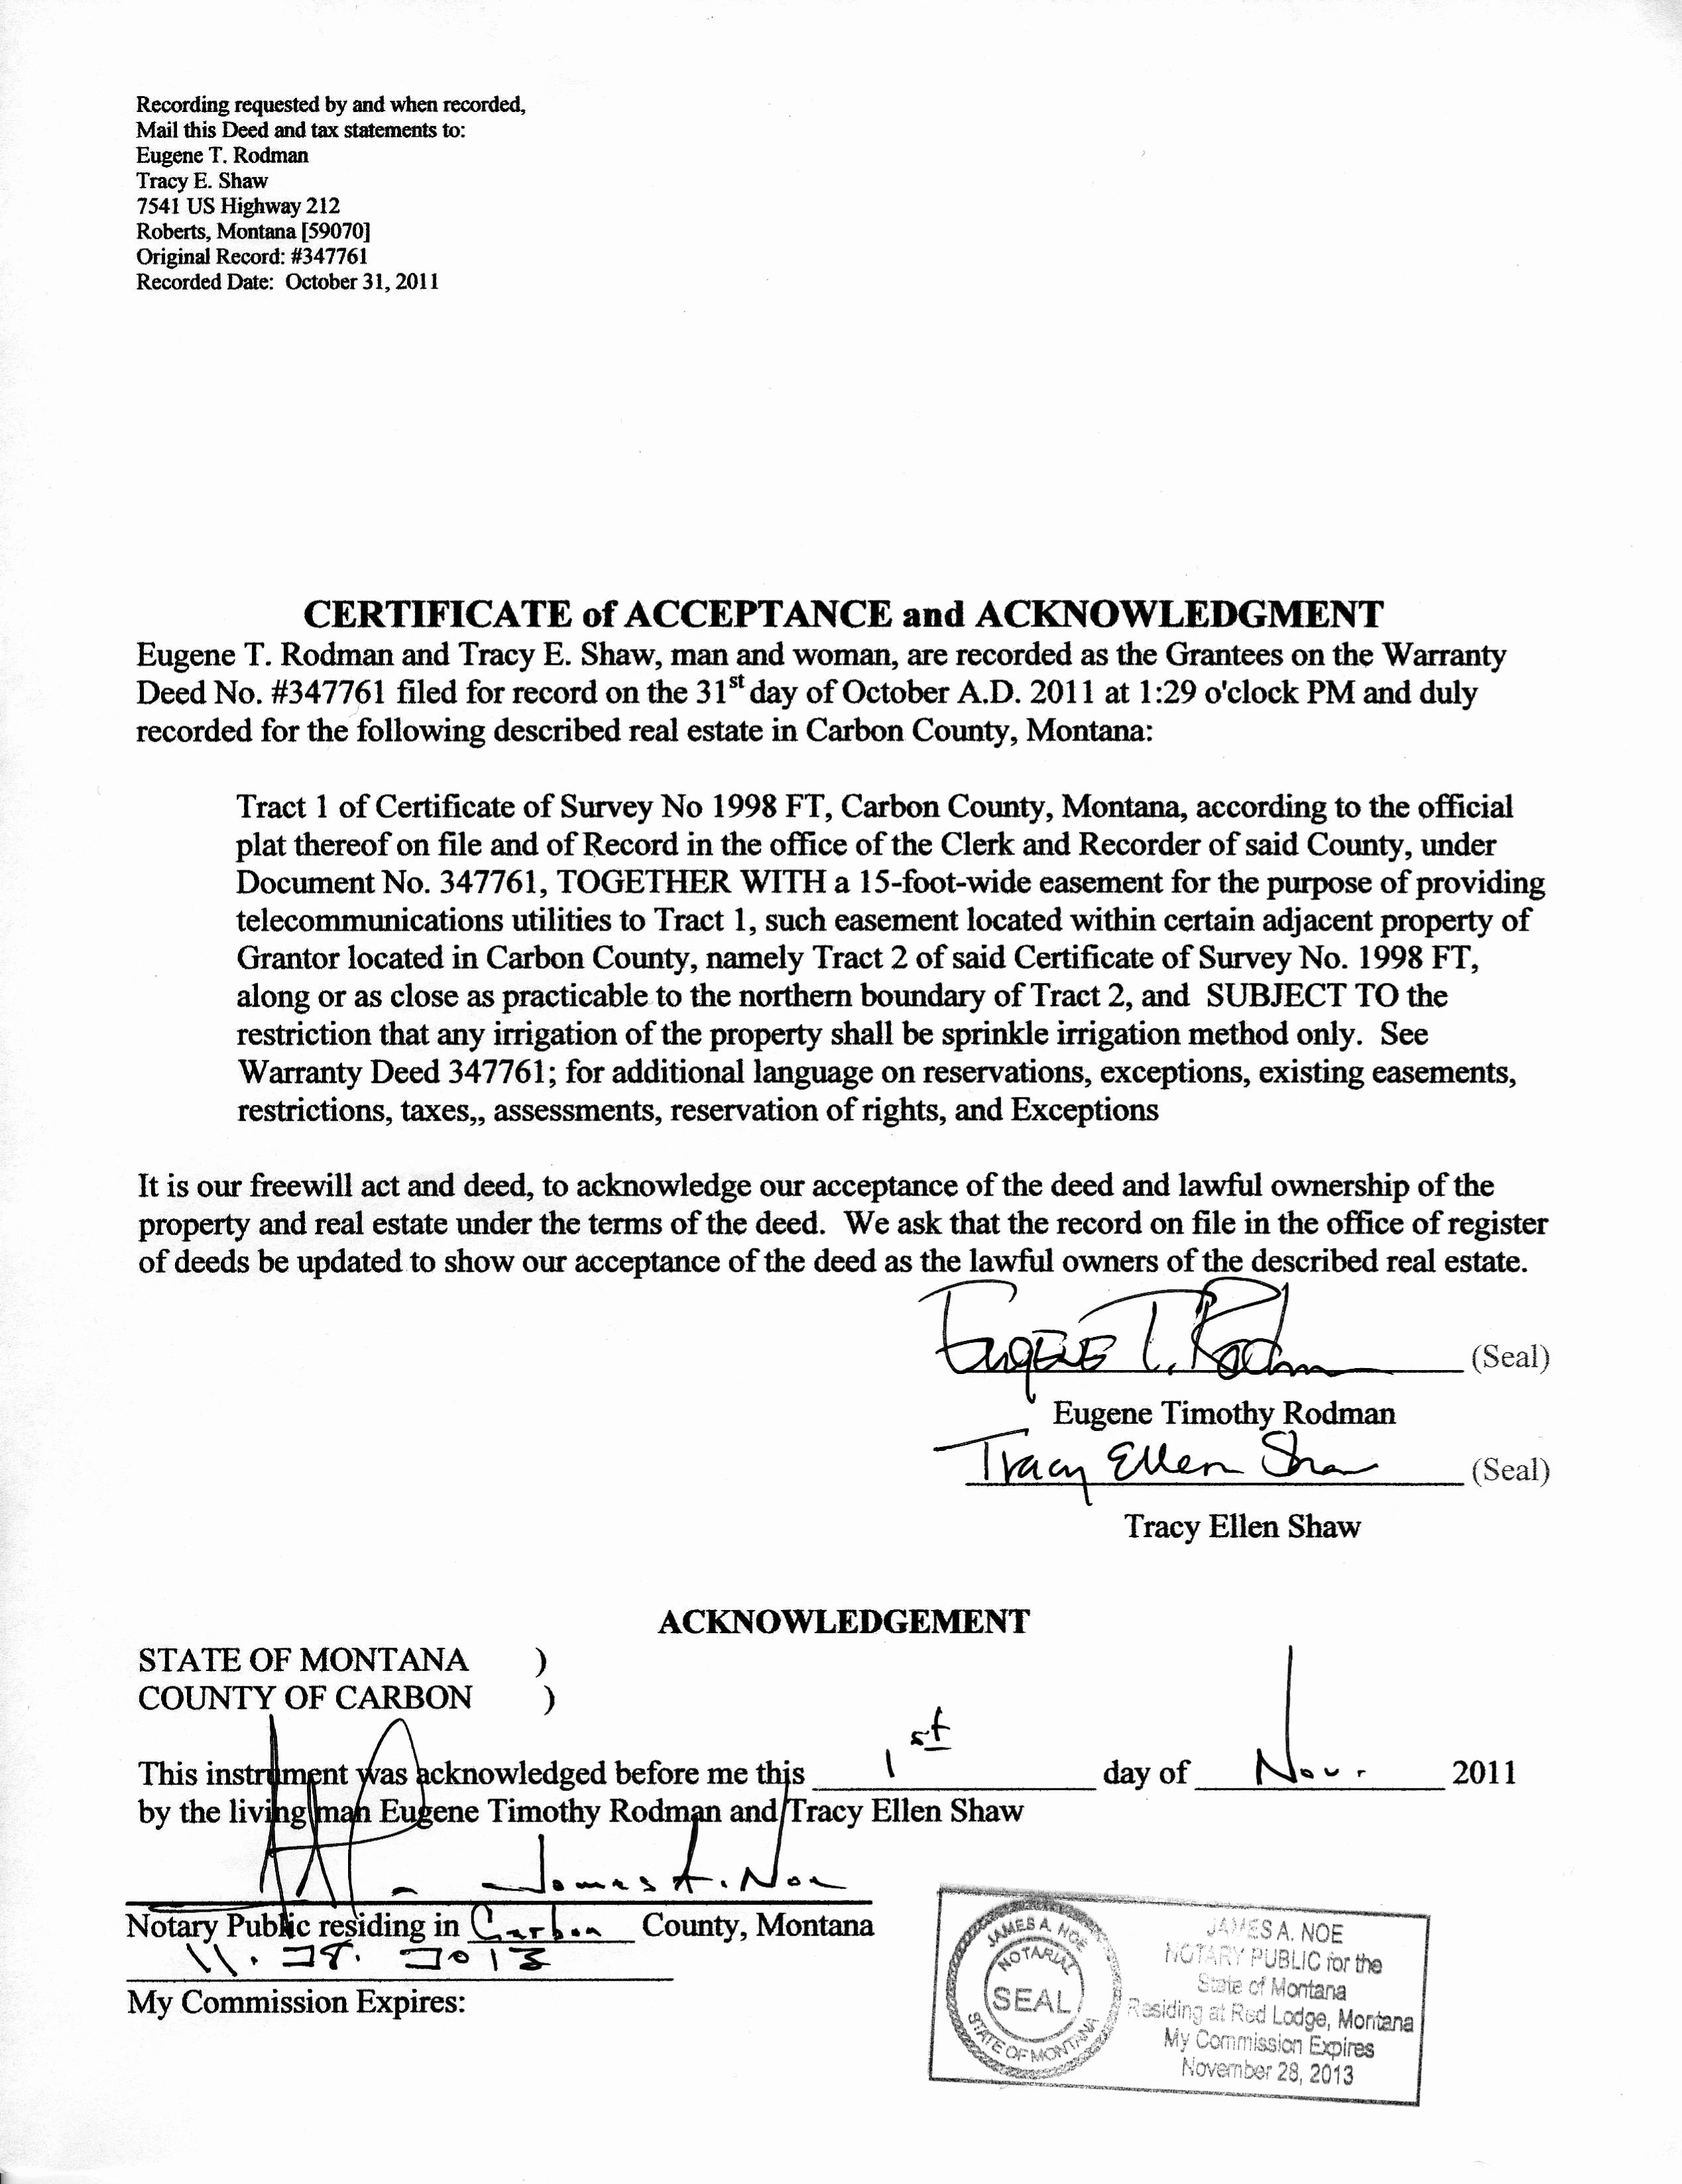 Certificate Of Acknowledgement Template Awesome Certificate Of Acceptance and Acknowledgment Of Warranty